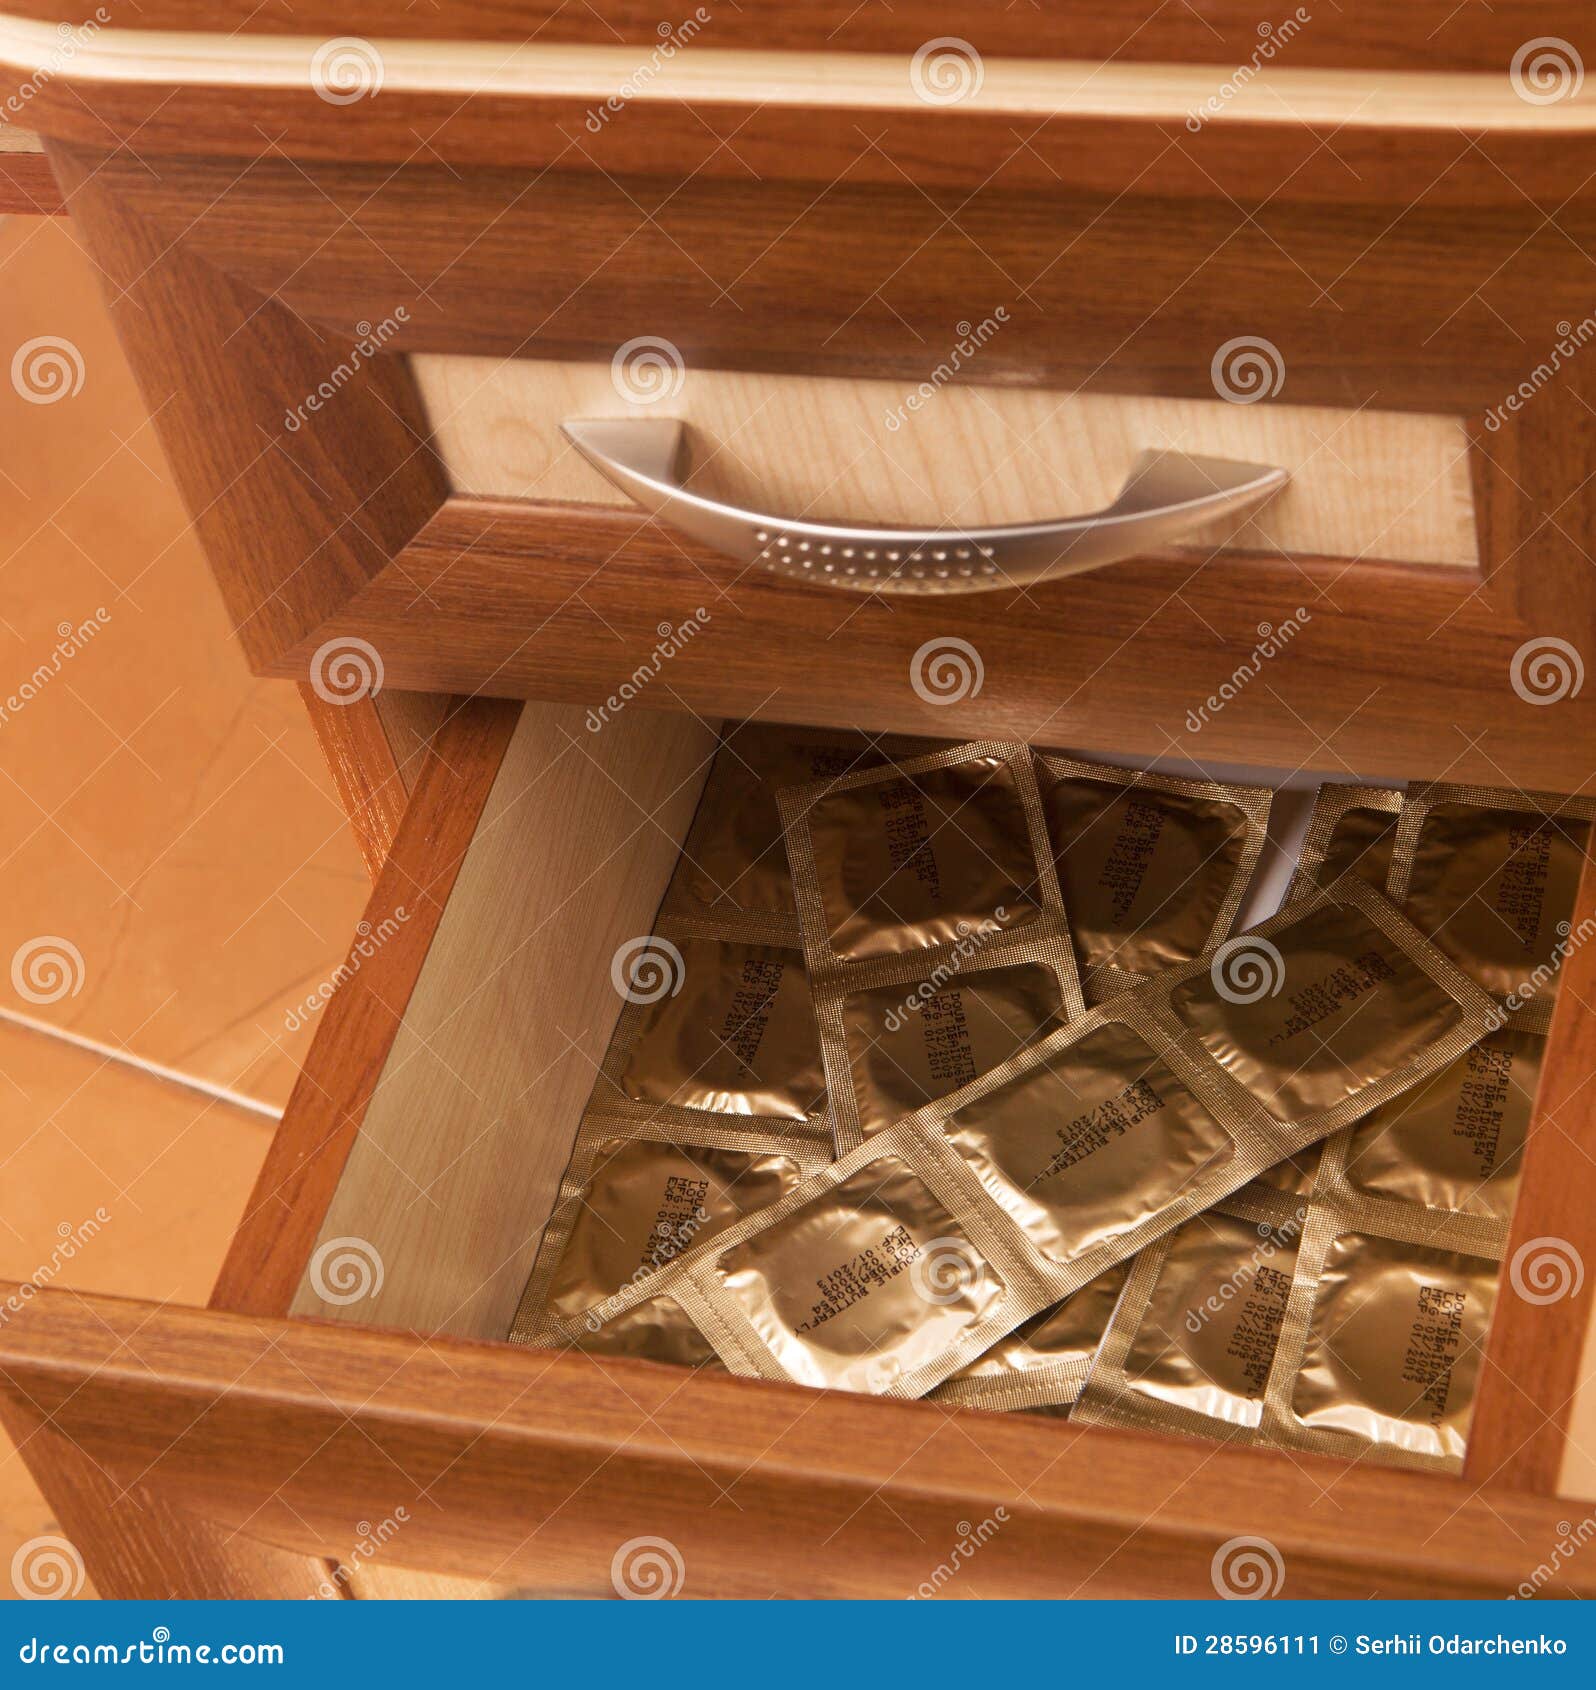 Condoms In Desk Drawer Stock Image Image Of Furniture 28596111